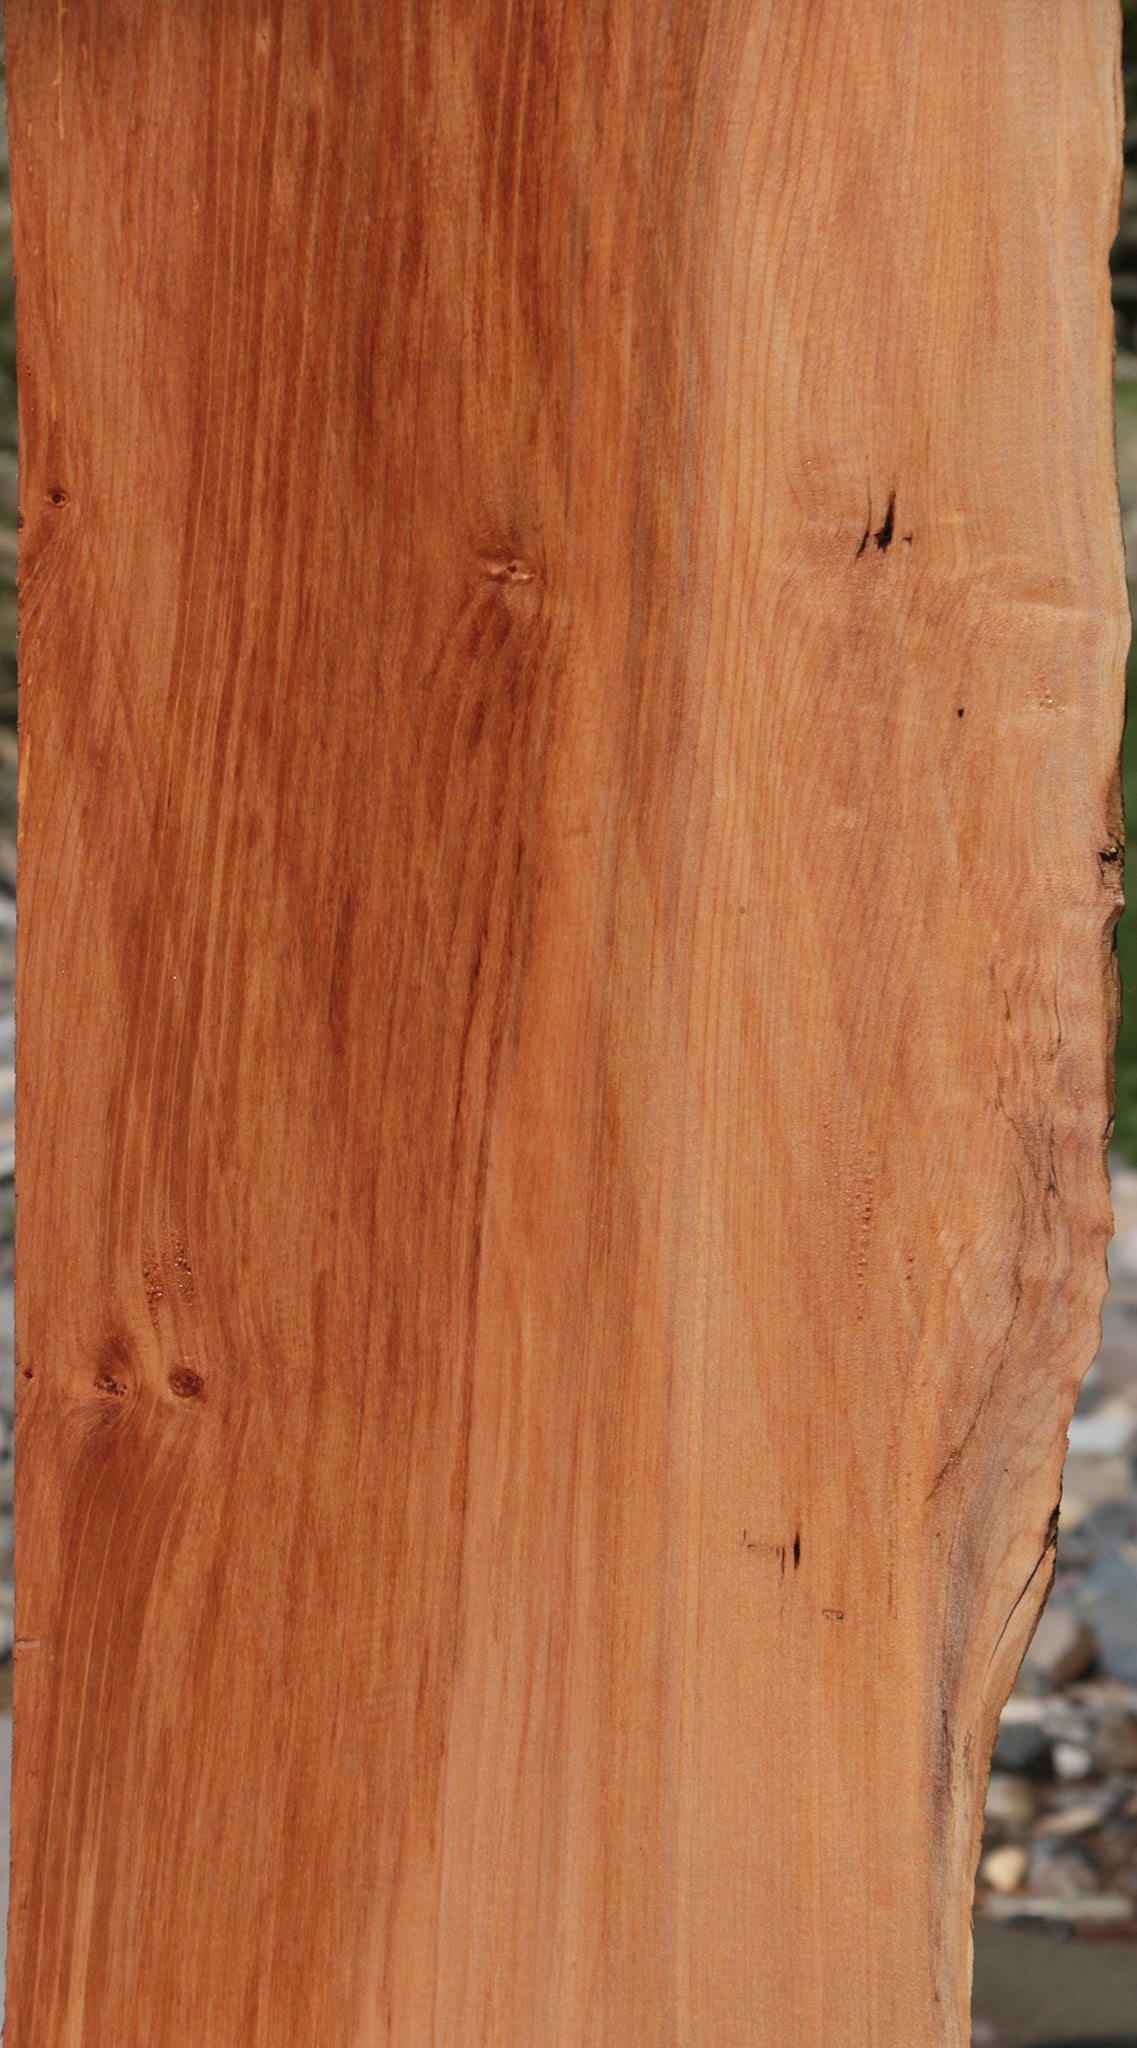 Western Maple Live Edge Lumber